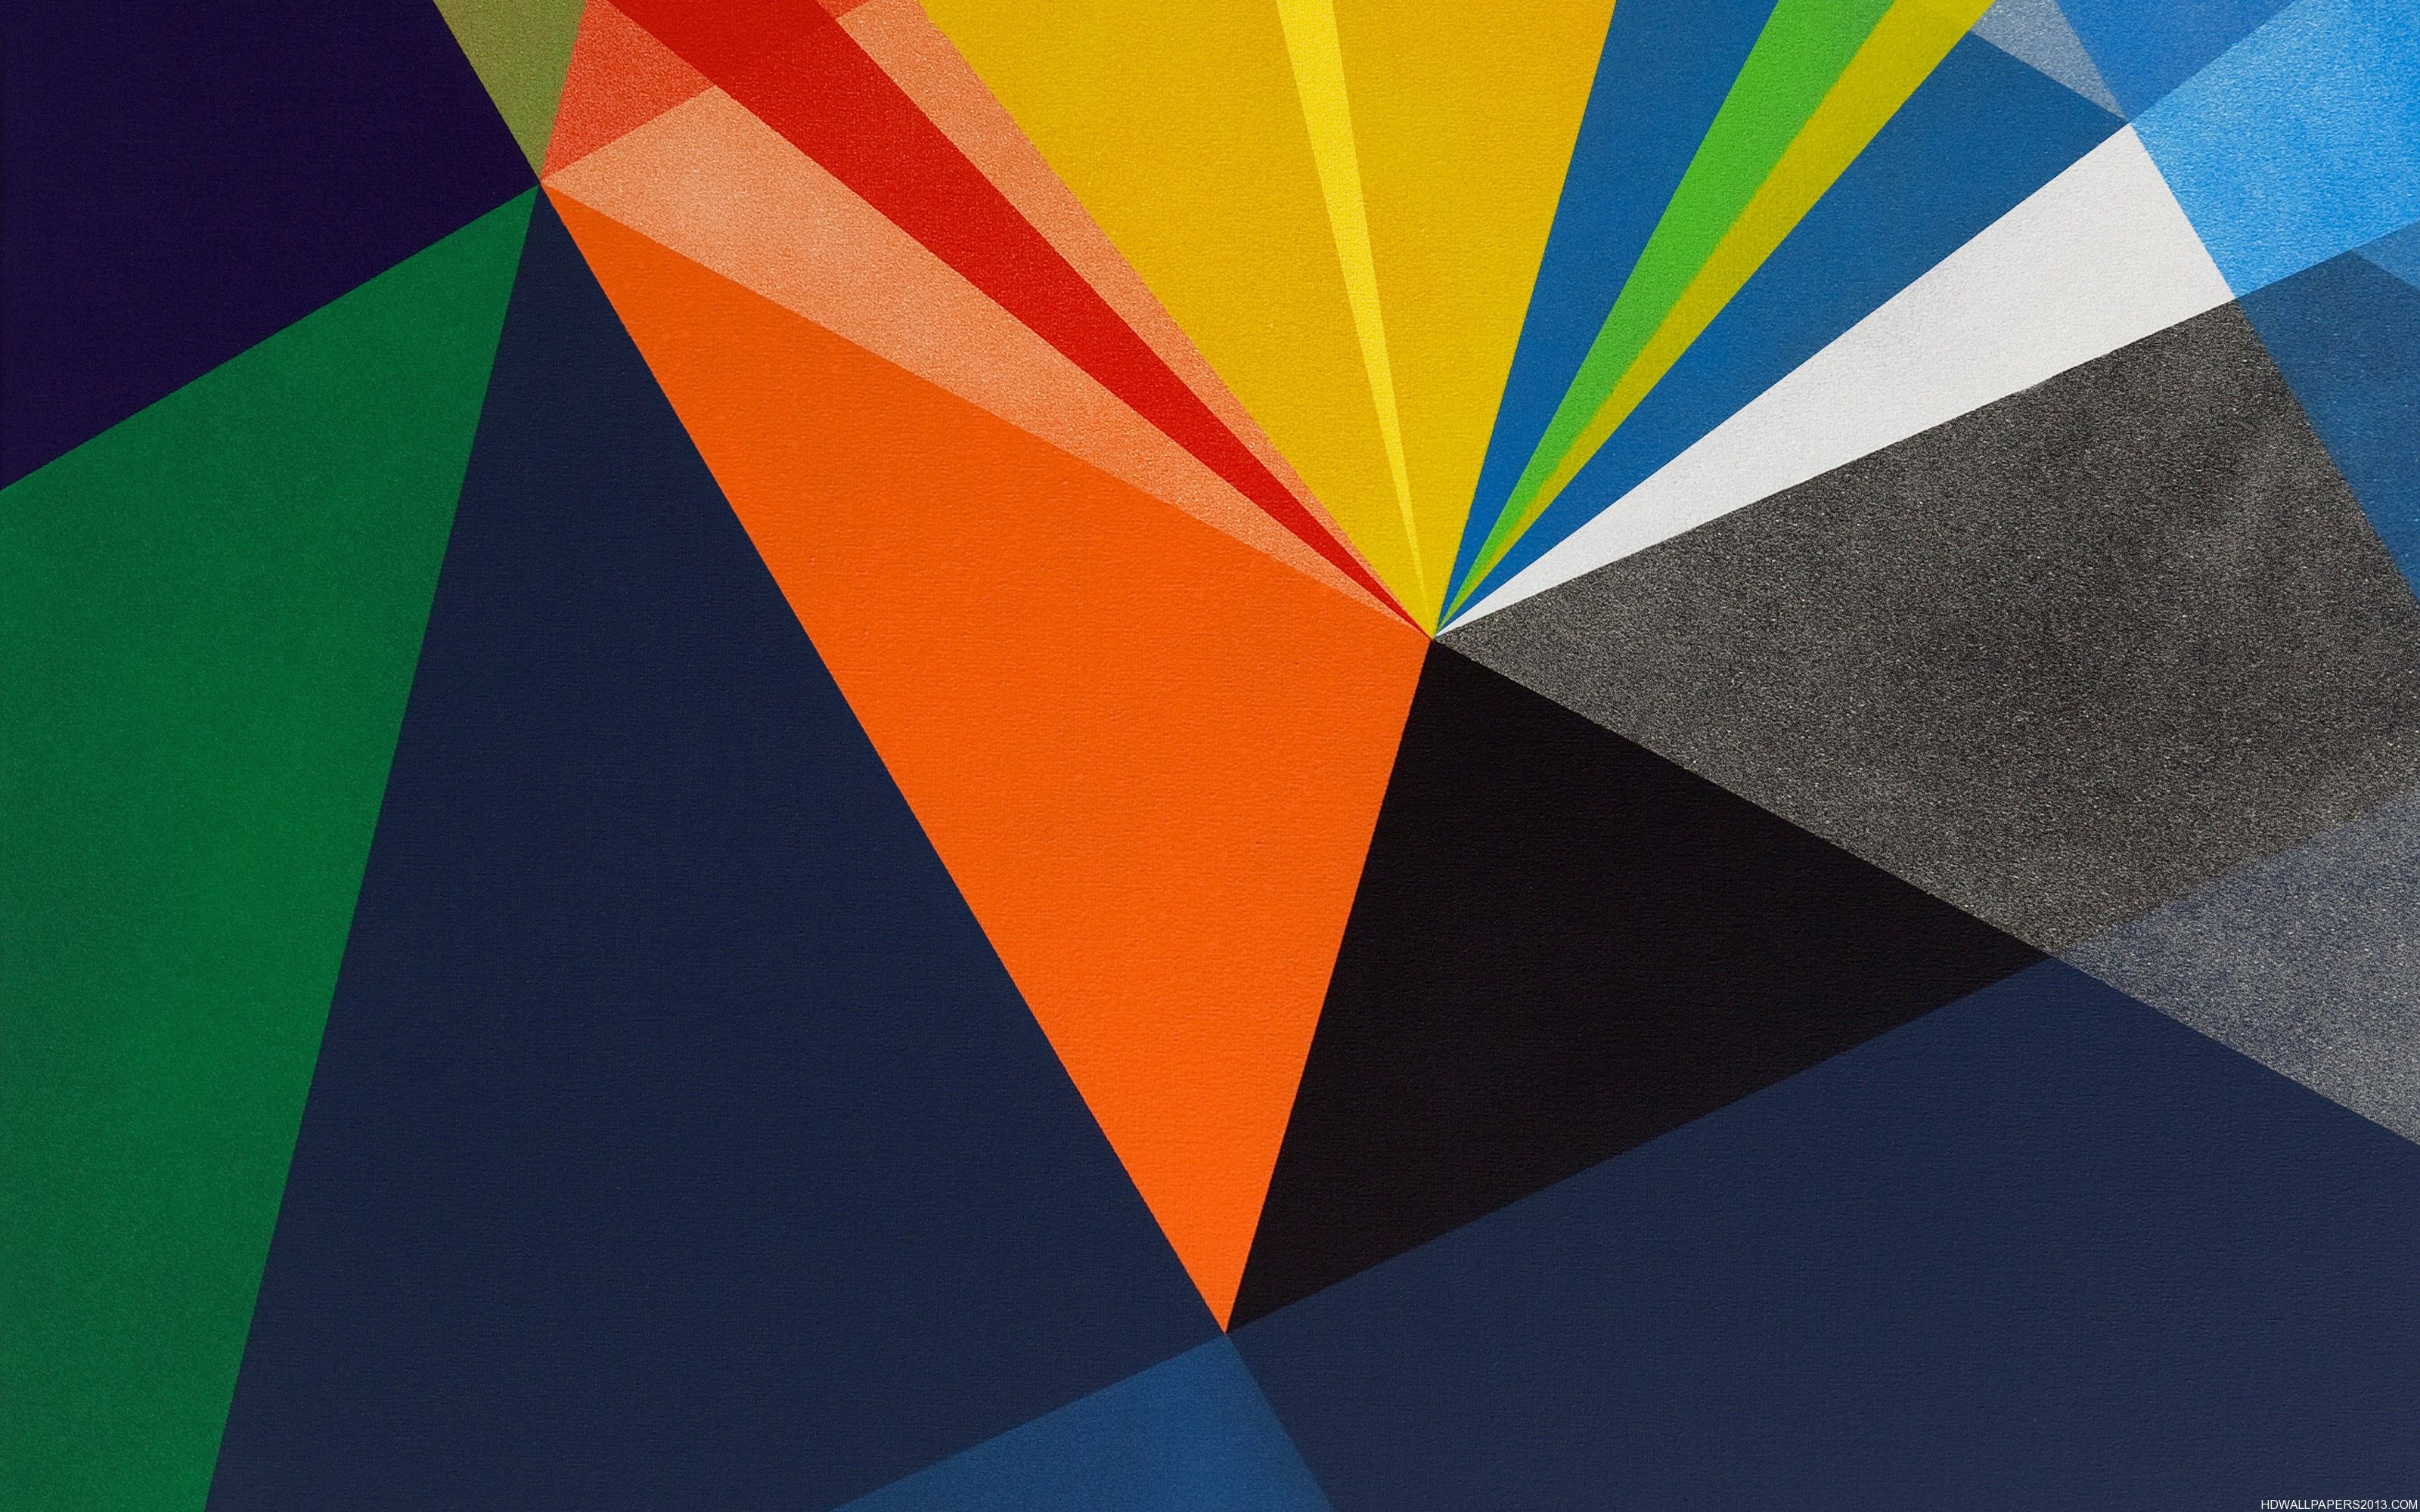 Triangular shapes wallpaper. High Definition Wallpaper, High Definition Background